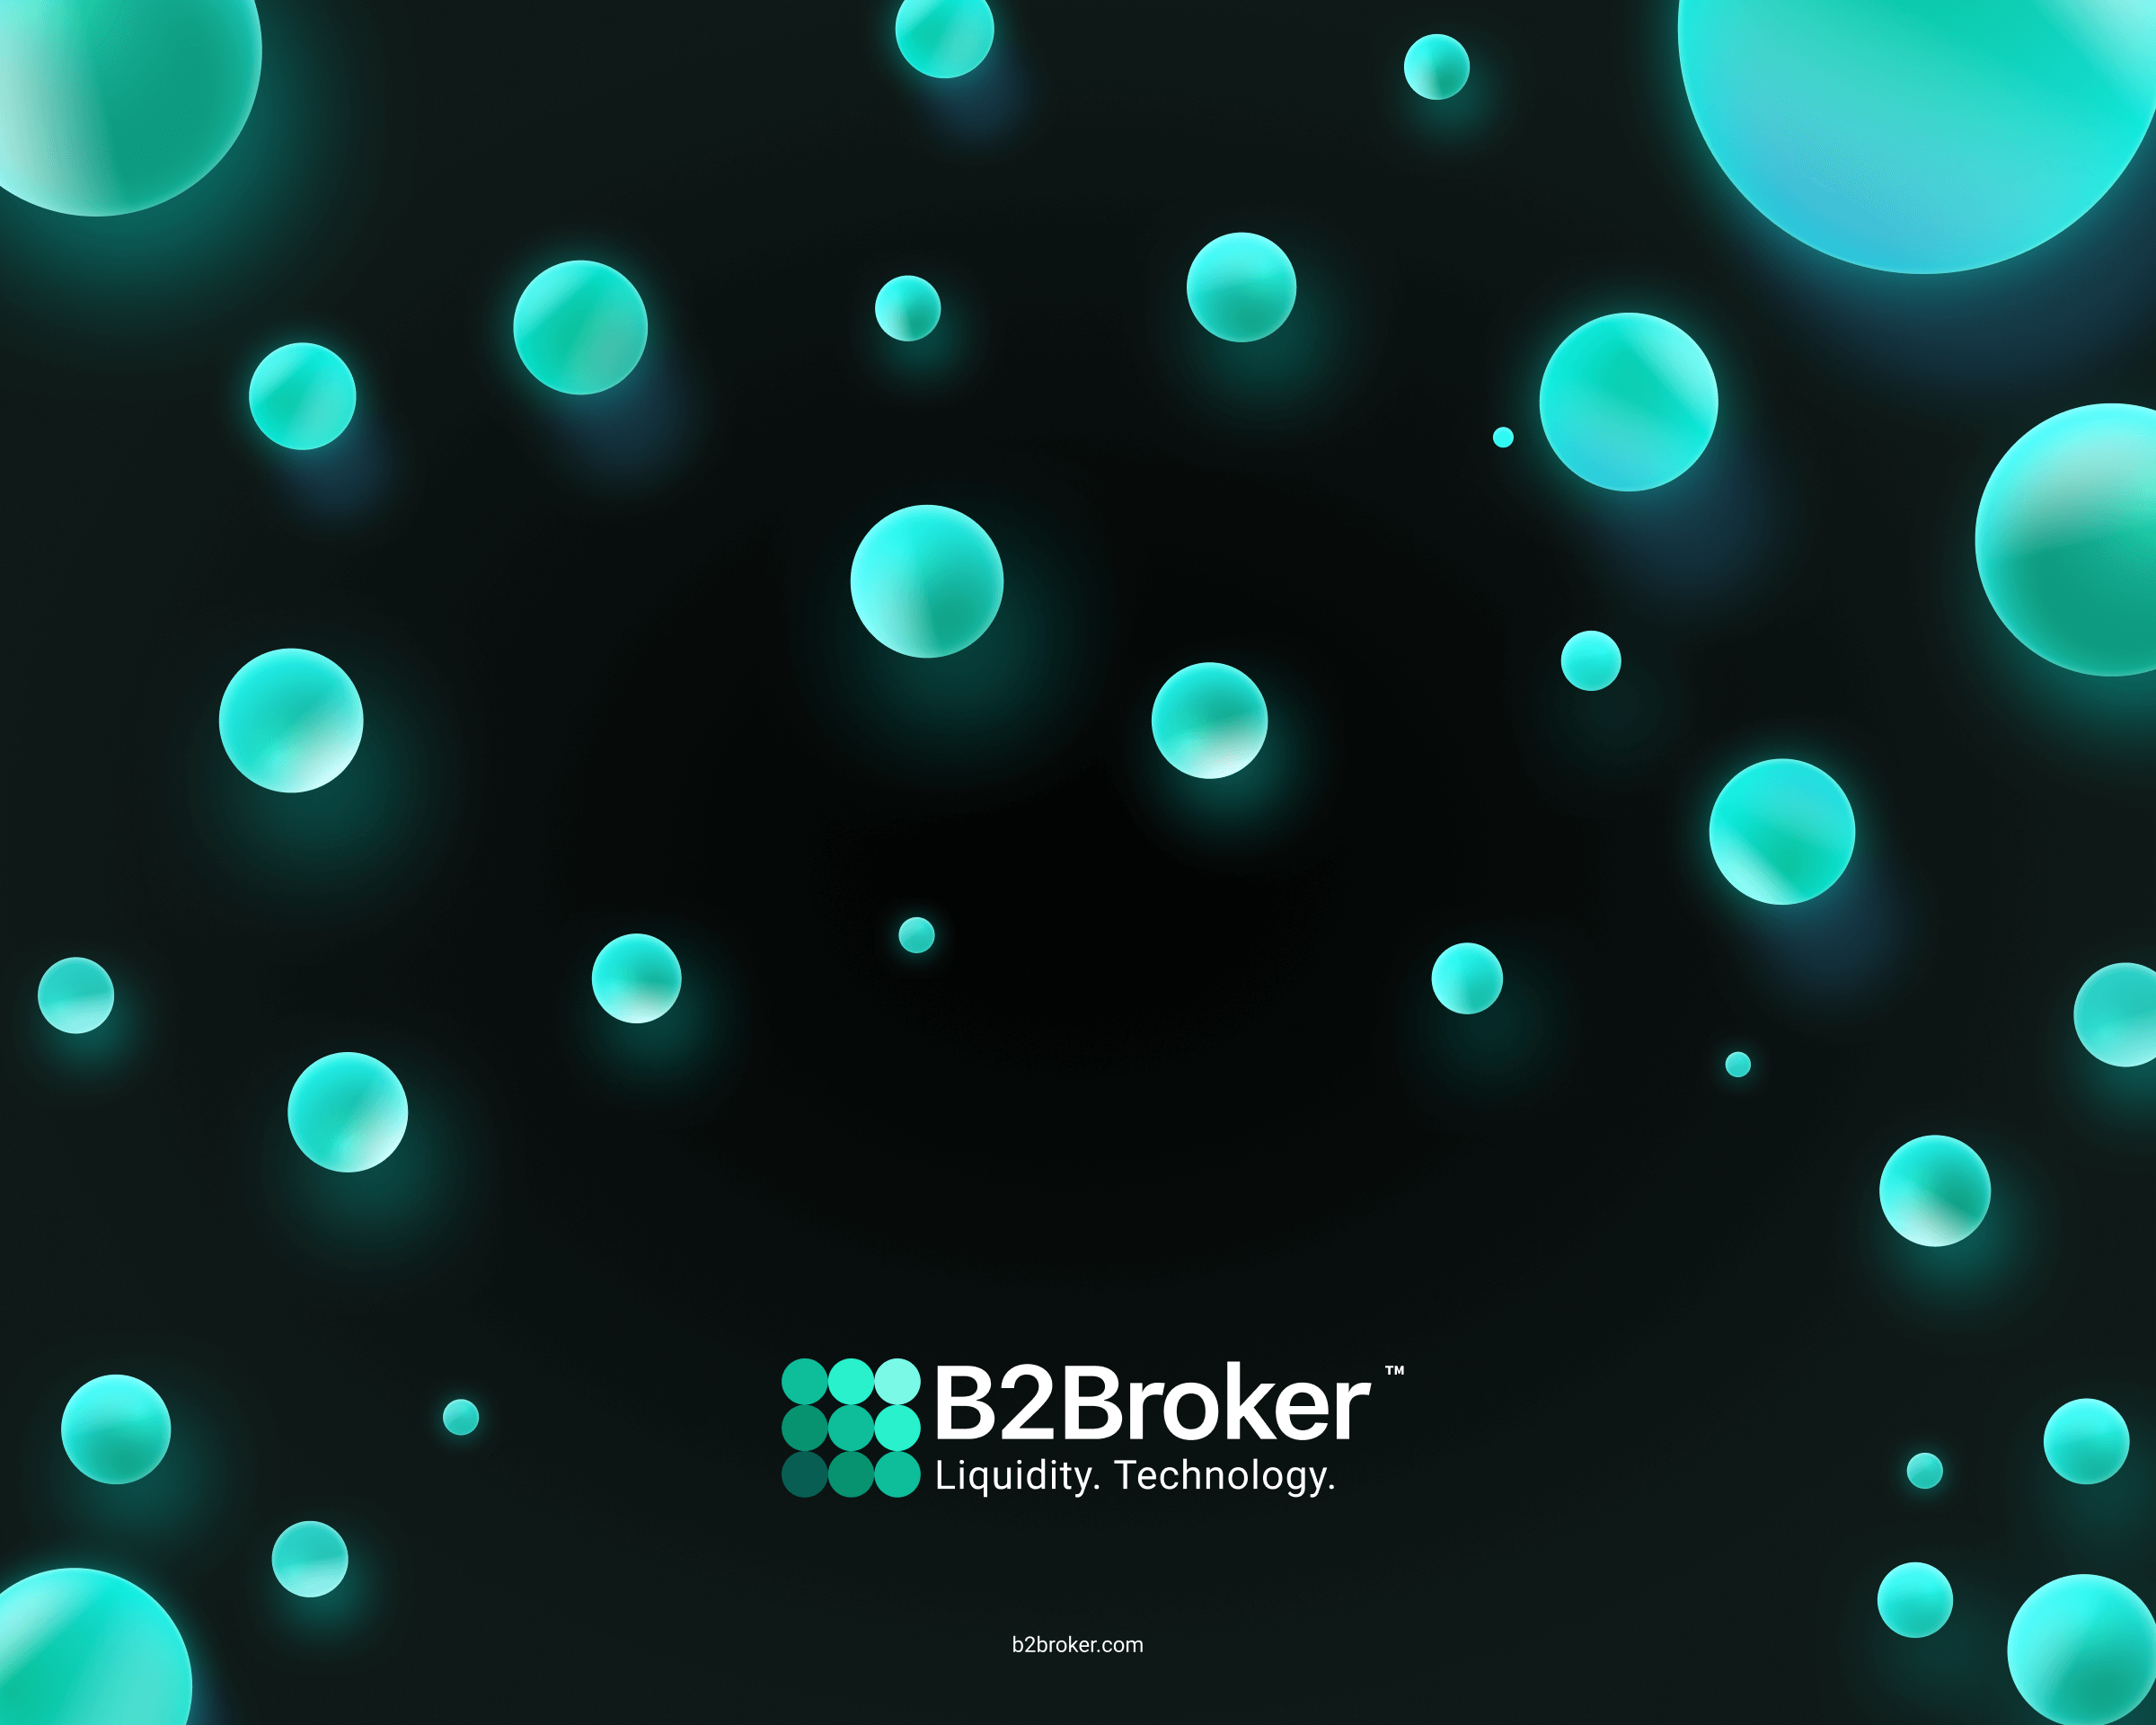 Провайдер ликвидности и технологий B2Broker обновил брендинг и перенес сайт на домен b2broker.com